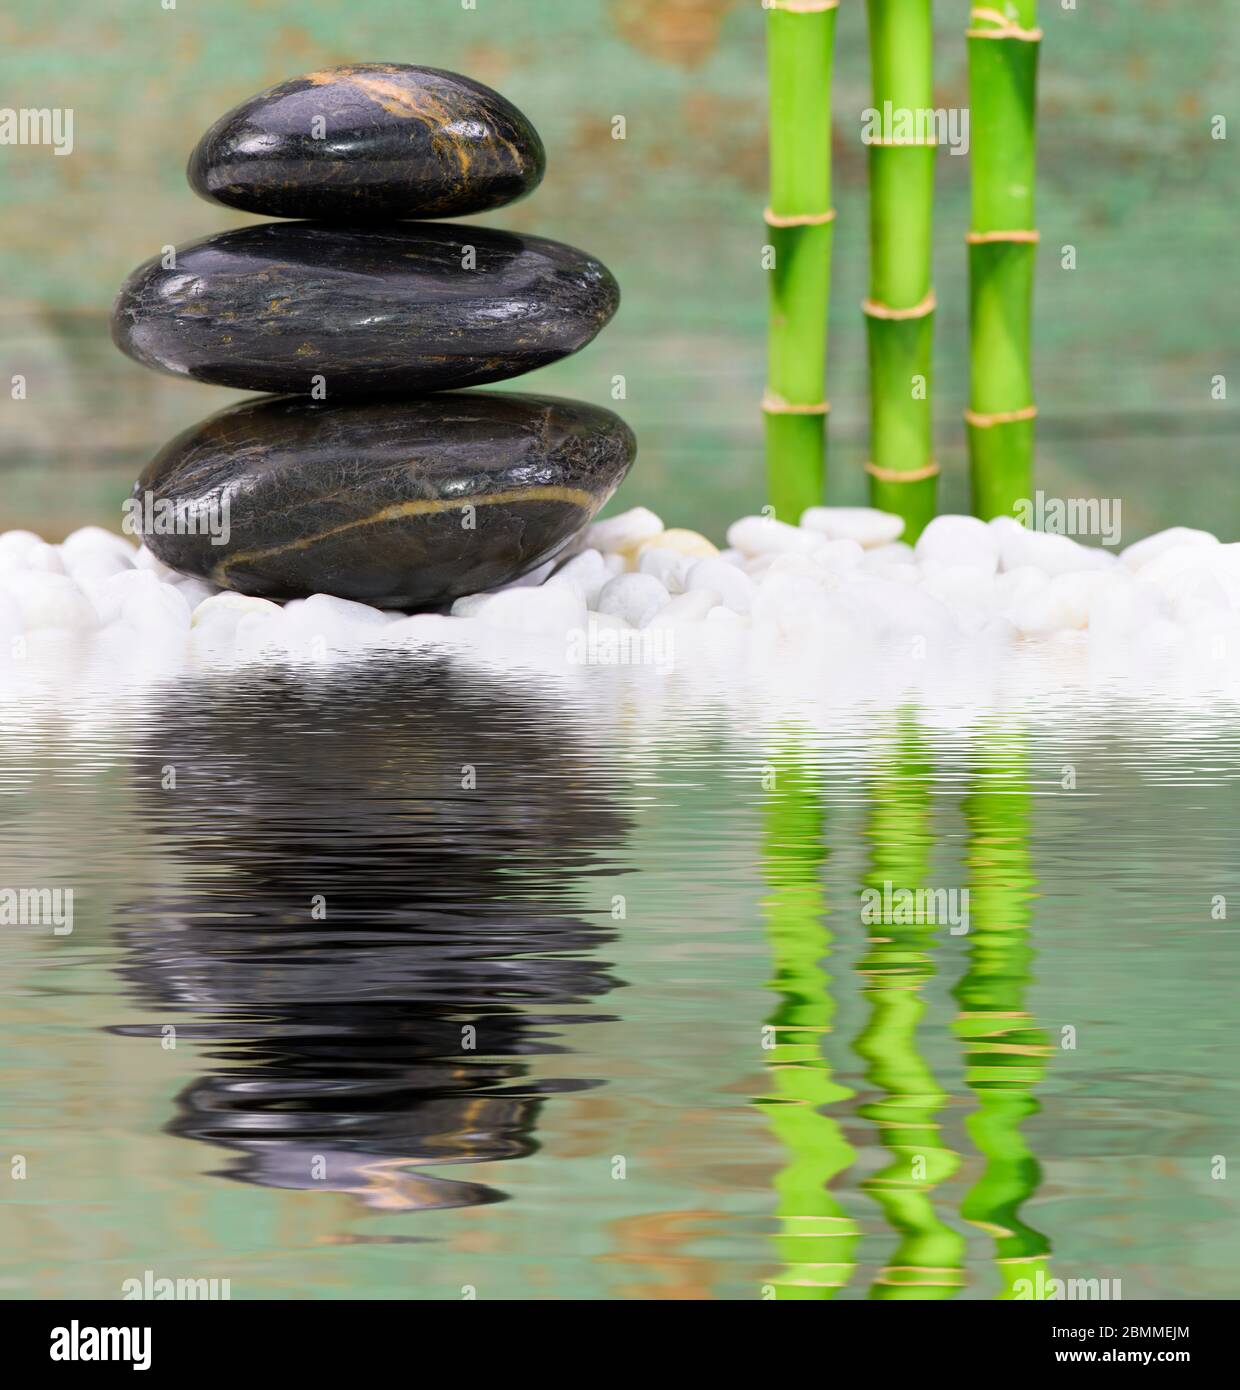 Japanese Zen garden with stacked stones mirroring in water Stock